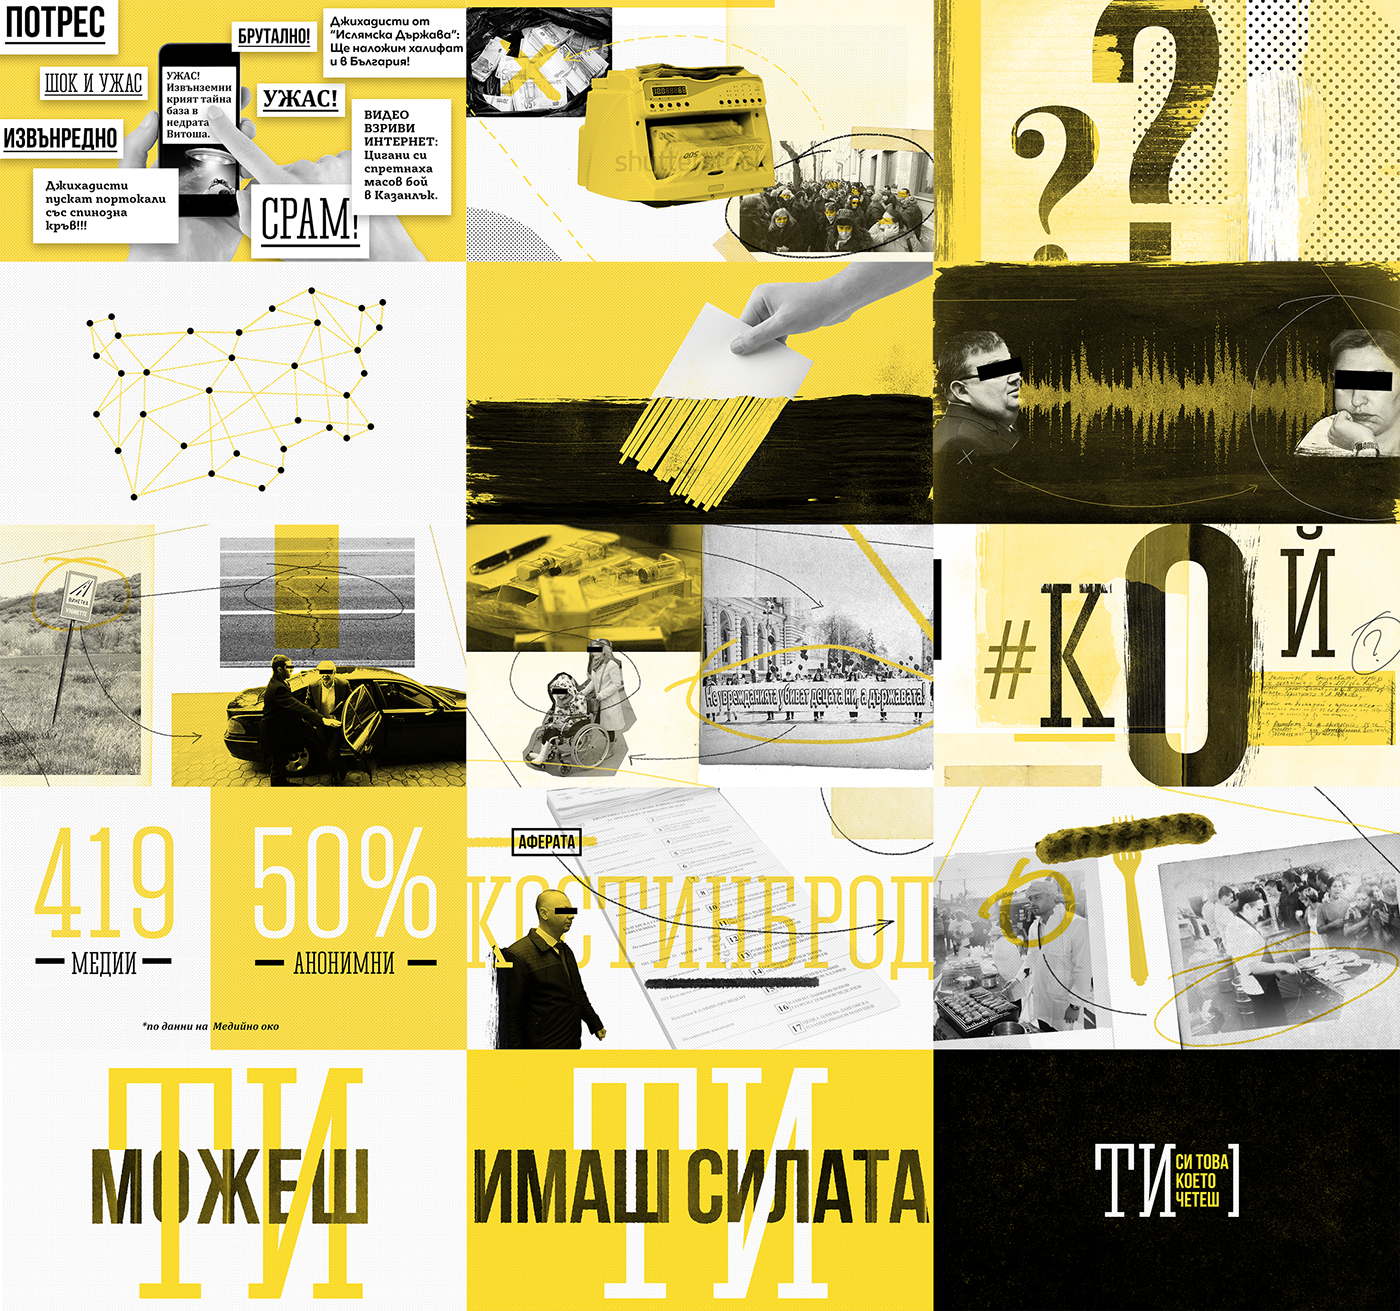 fake news investigative journalism collage animation  four plus bulgaria alternative facts politics mafia corruption